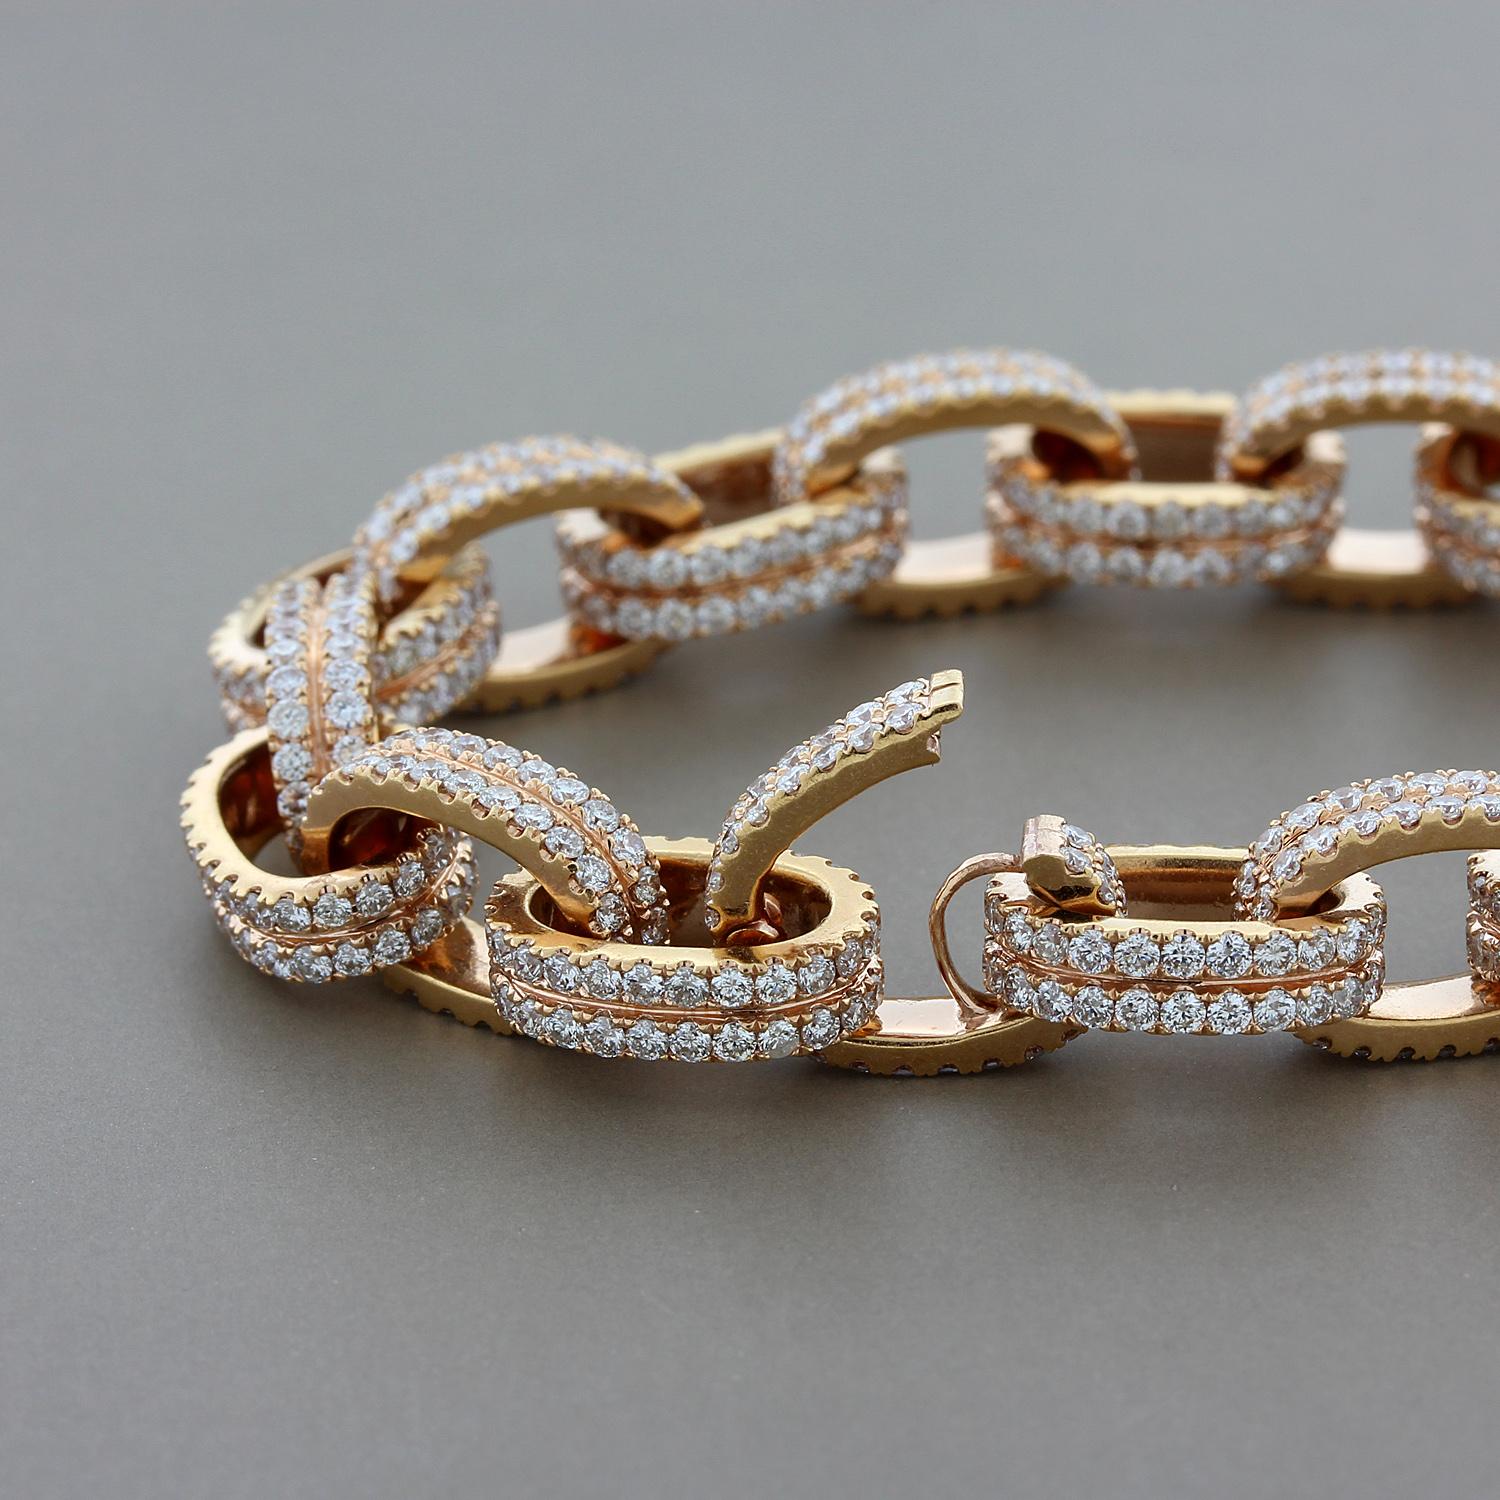 diamond link bracelet